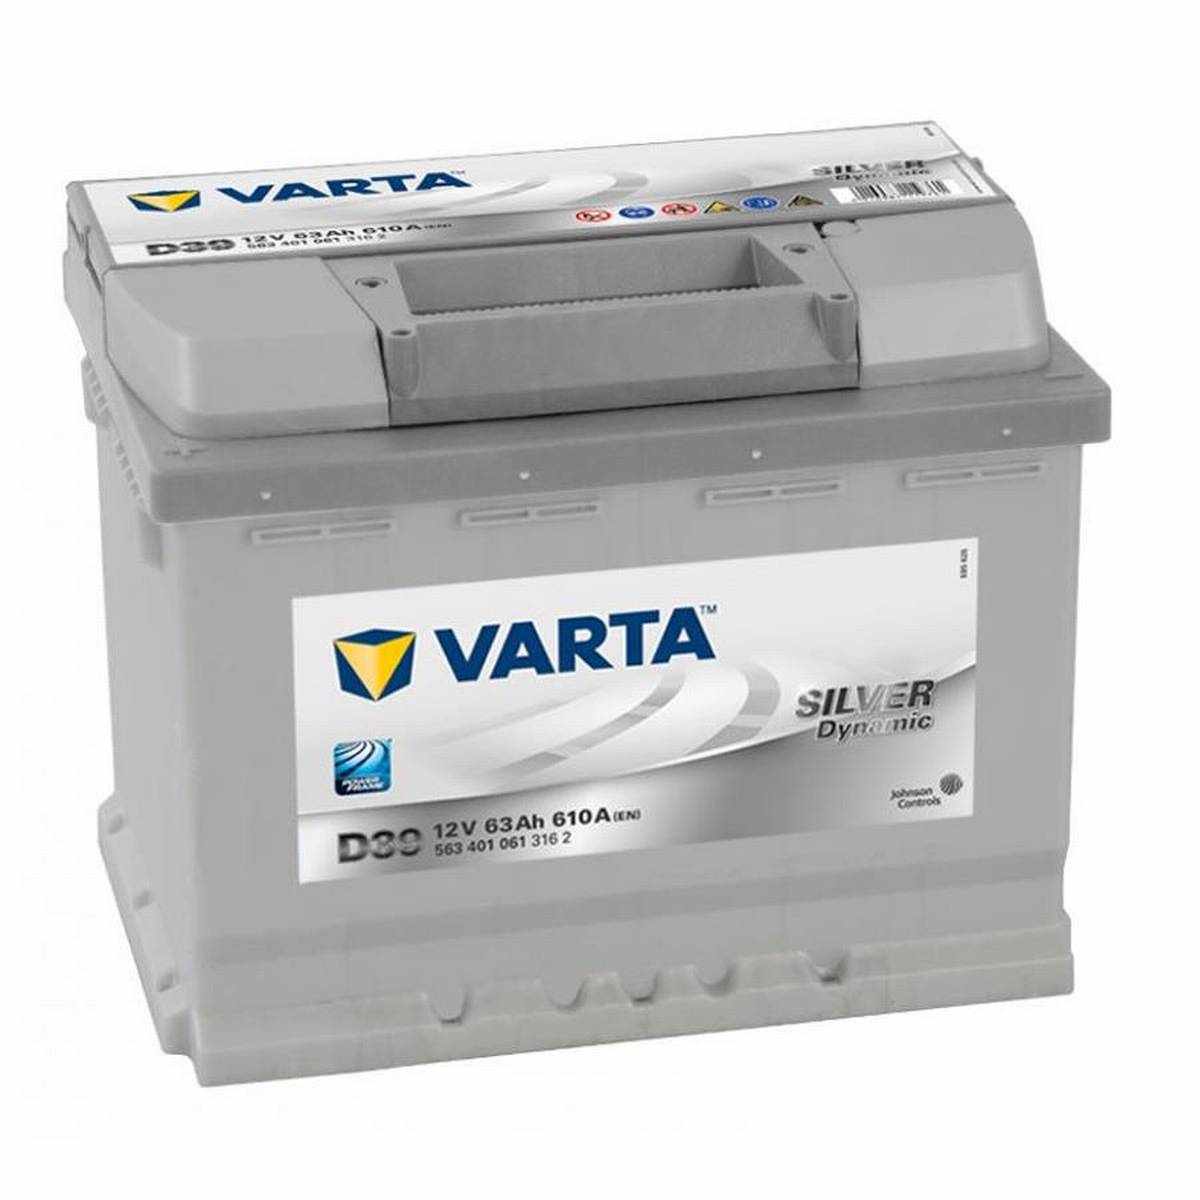 VARTA D39 Silver Dynamic 12V 63Ah 610A Autobatterie 563 401 061